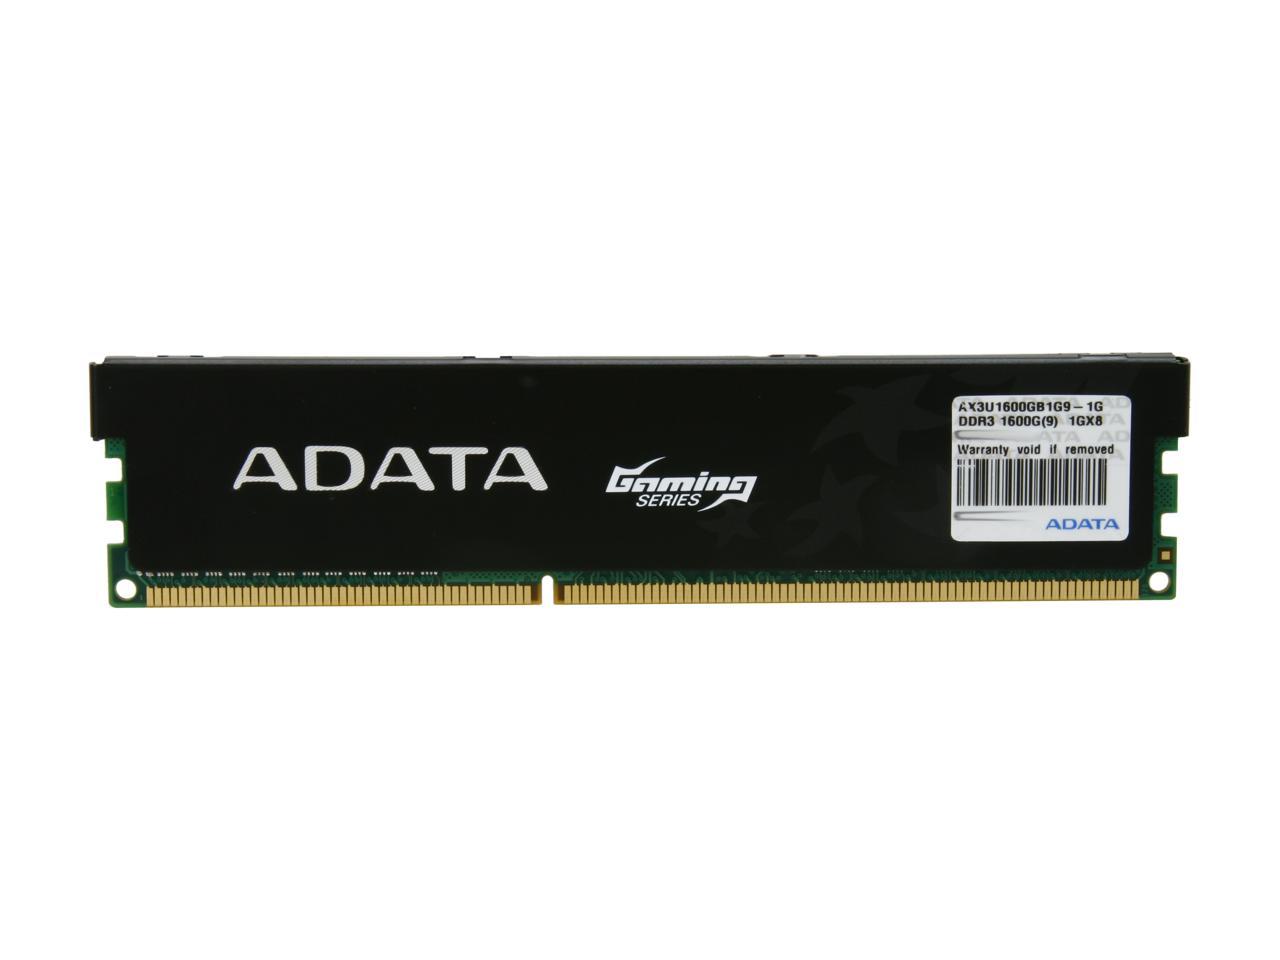 ADATA Gaming Series 1GB 240-Pin DDR3 SDRAM DDR3 1600 (PC3 12800) Desktop Memory Model AX3U1600GB1G9-CG